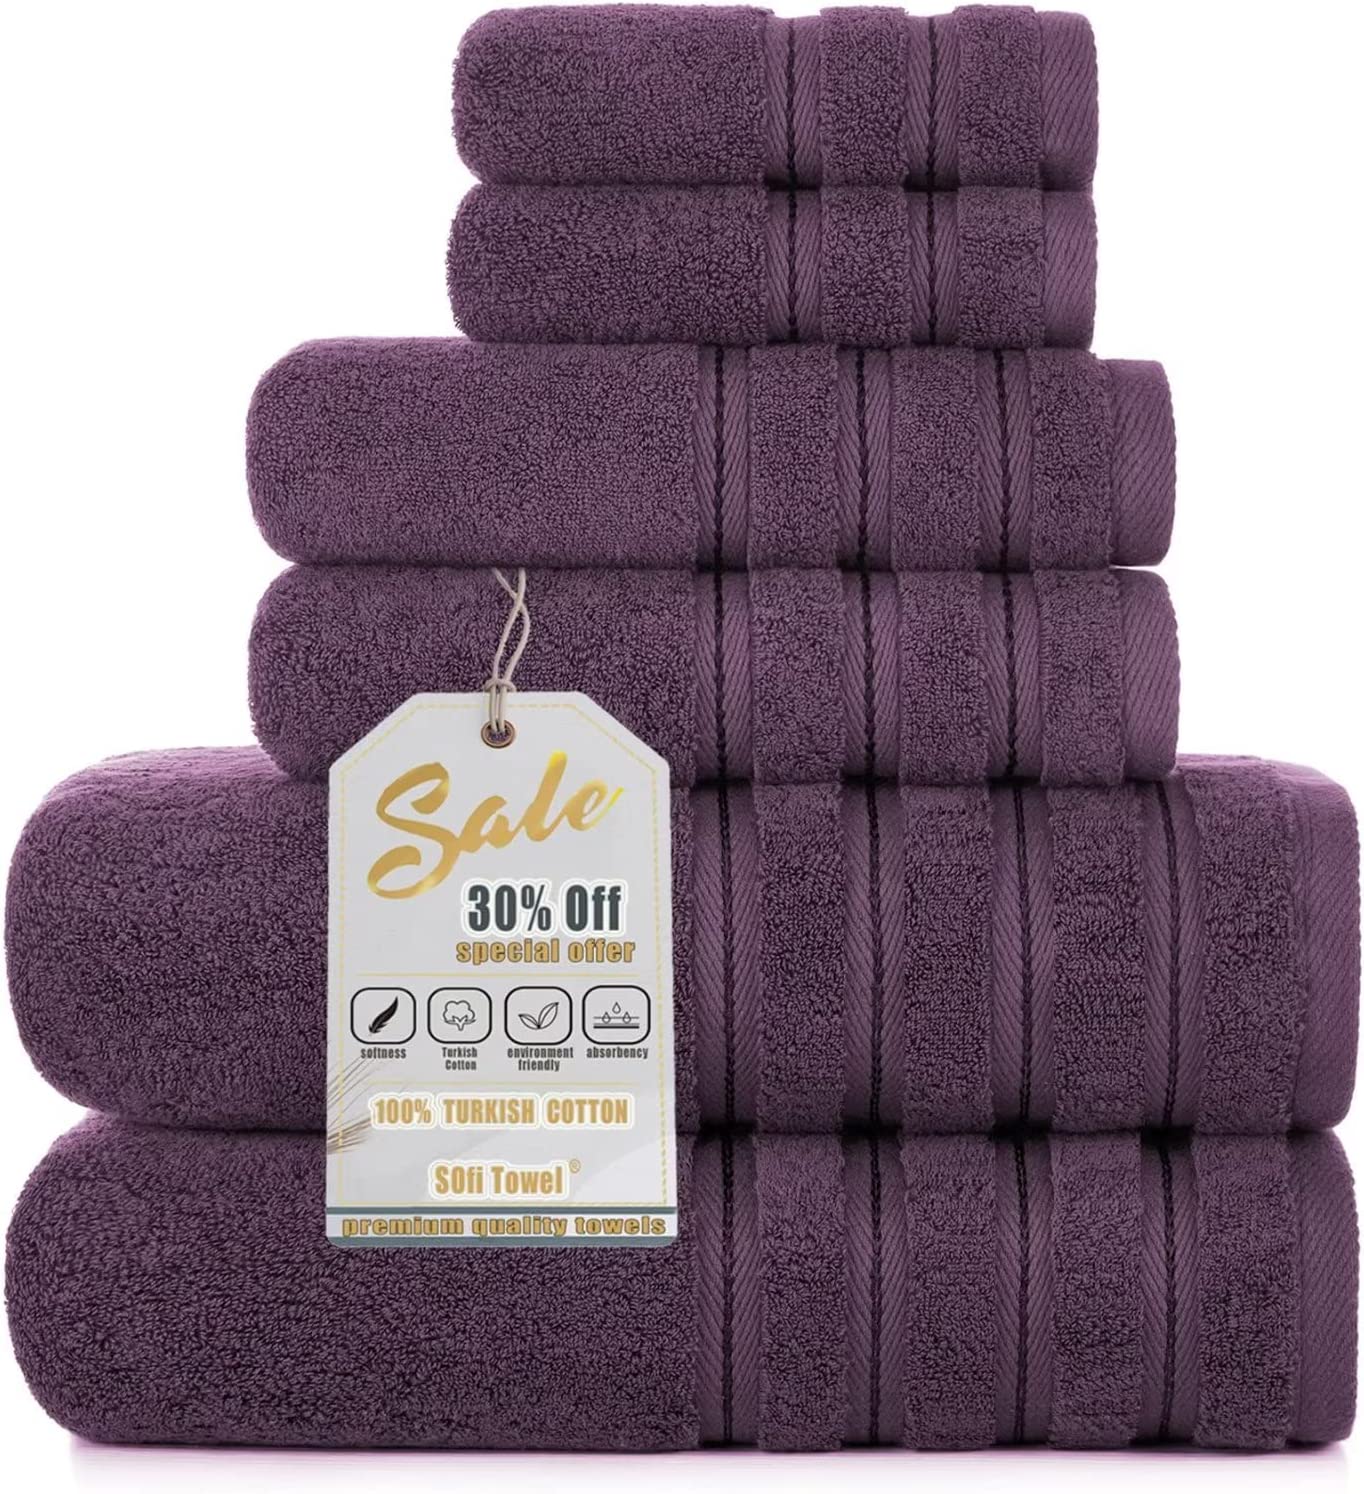 Sofi Towel 1 Luxury Turkish Towels Bathroom Sets clearance 6